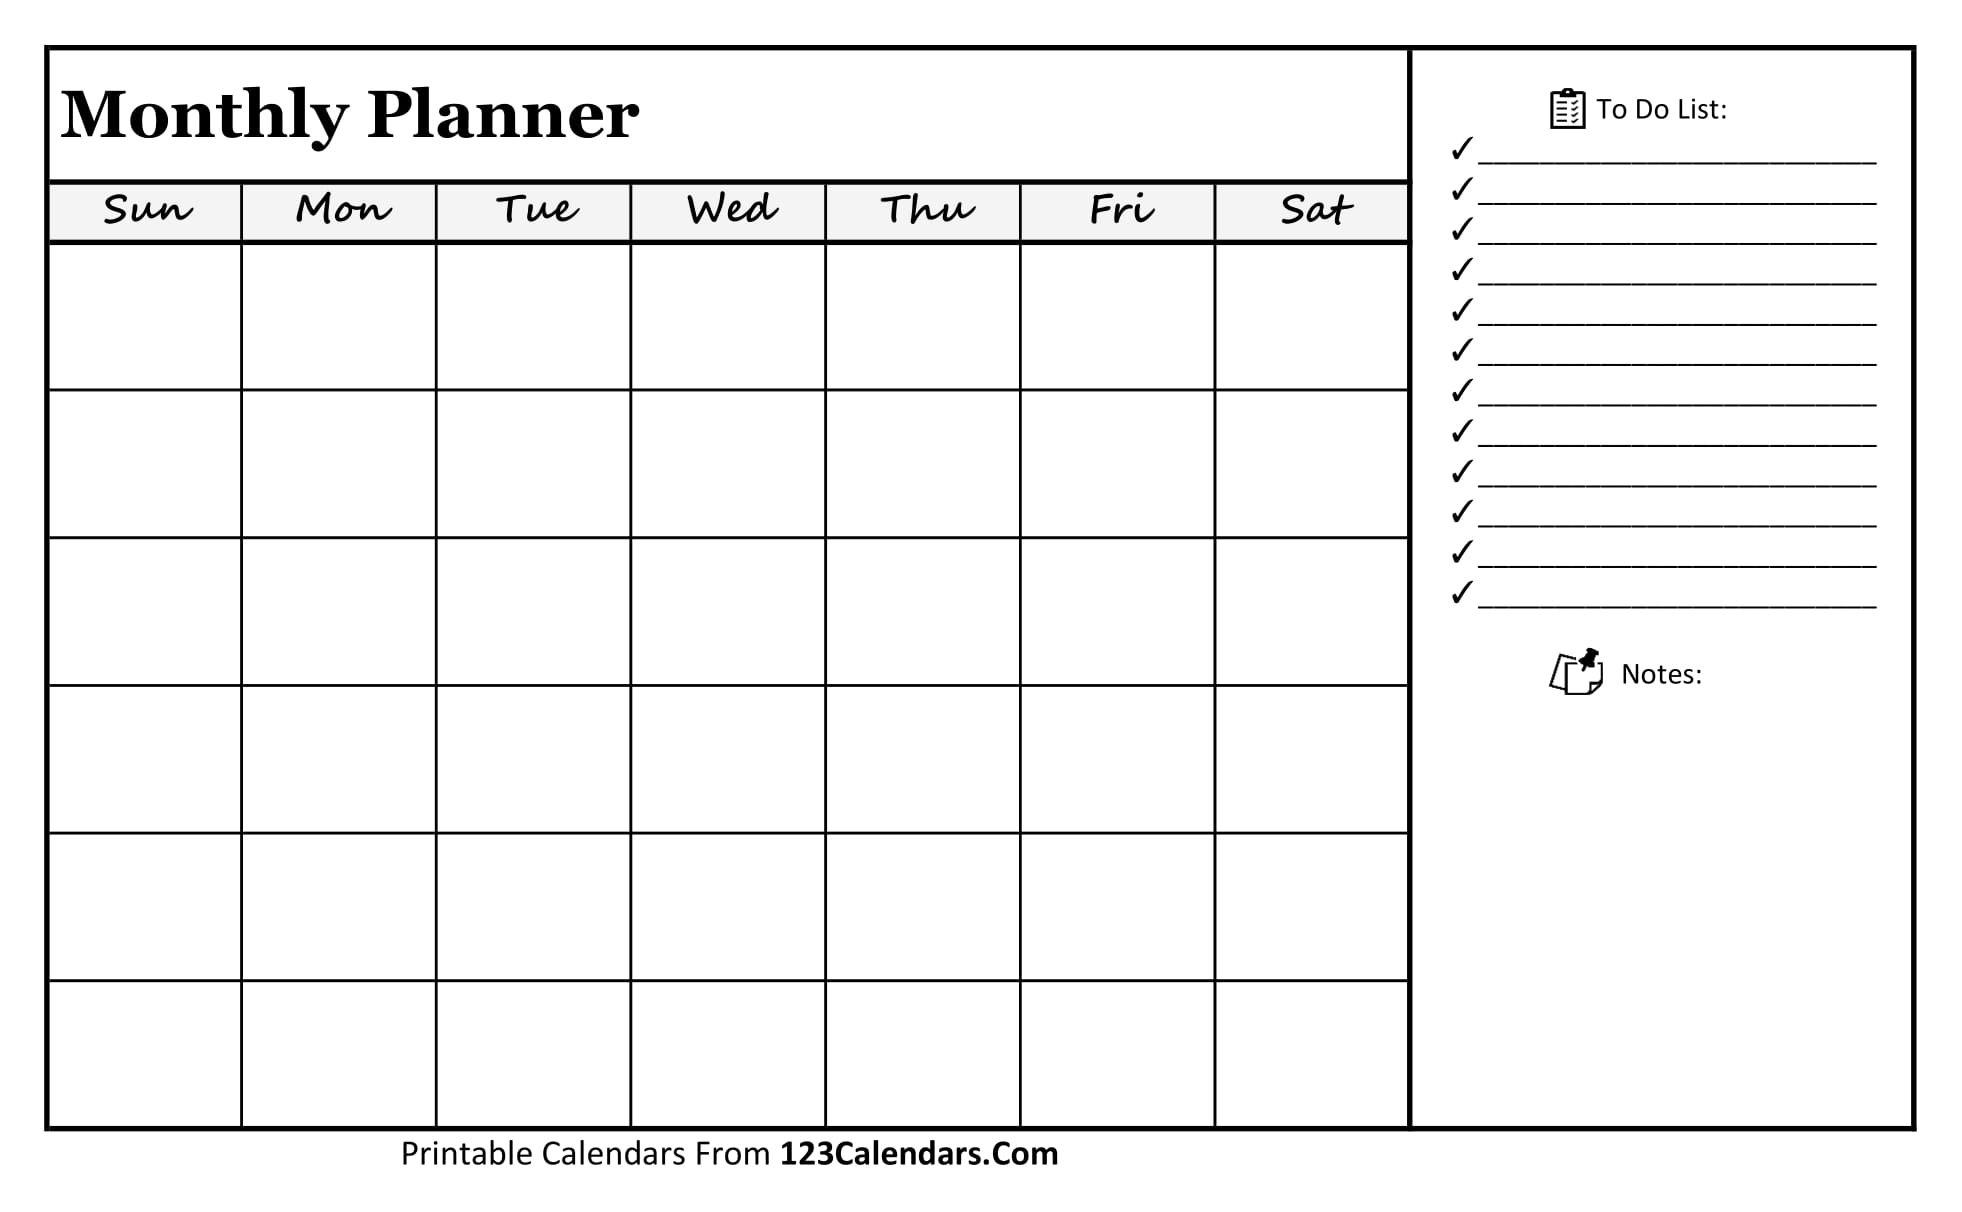 Printable Monthly Planner Templates 123Calendars com